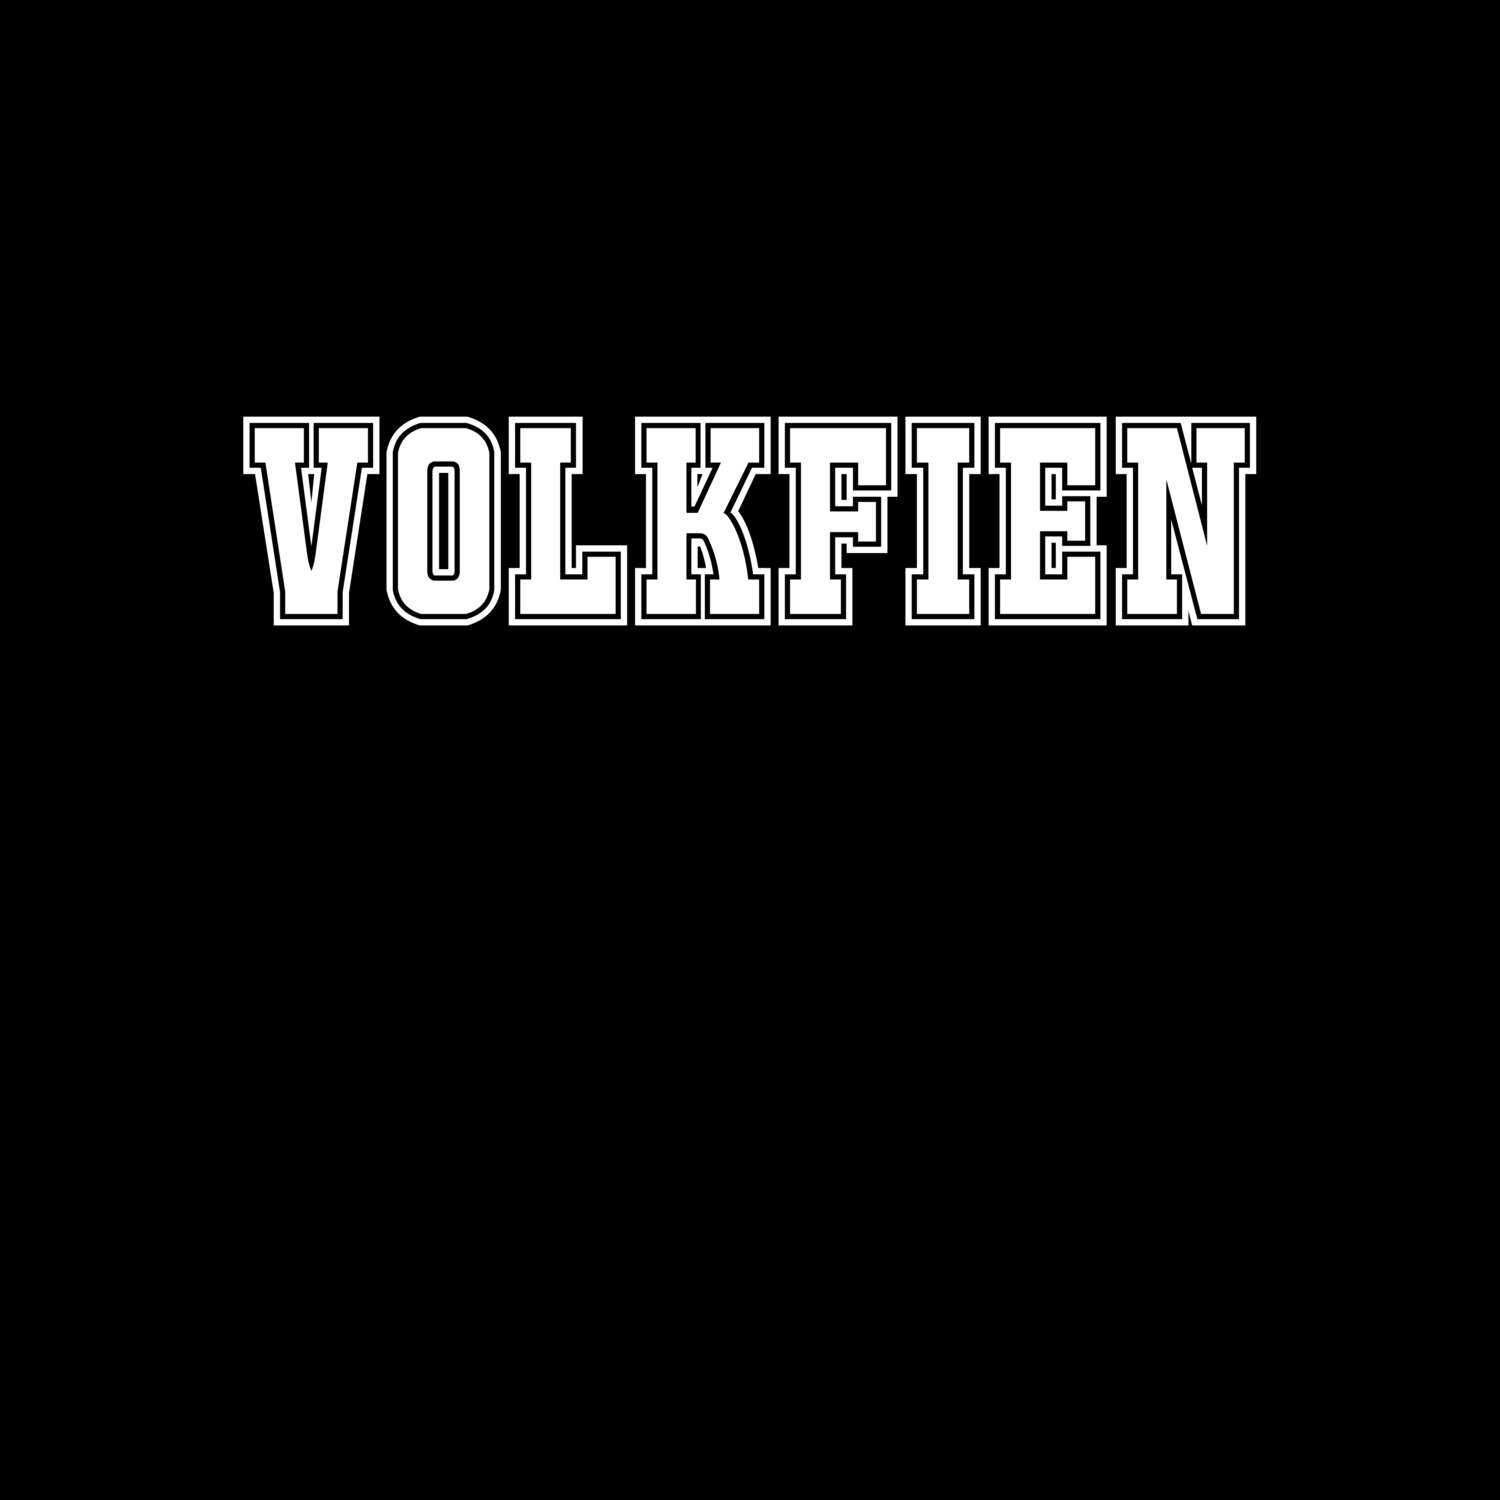 Volkfien T-Shirt »Classic«